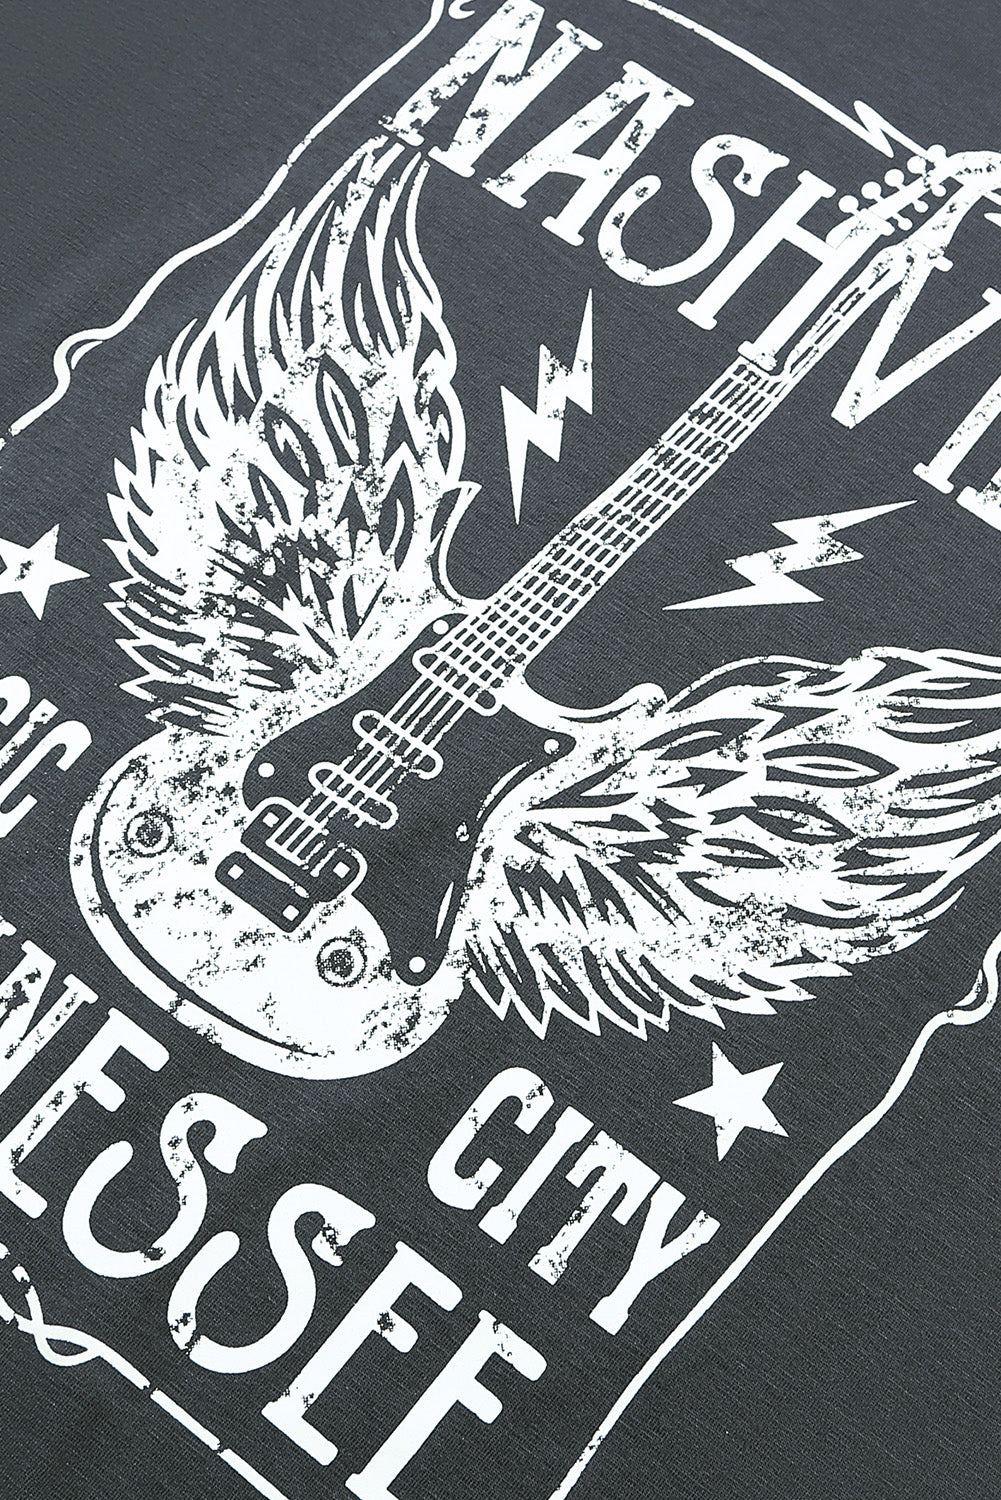 NASHVILLE MUSIC CITY TENNESSEE Graphic T-Shirt